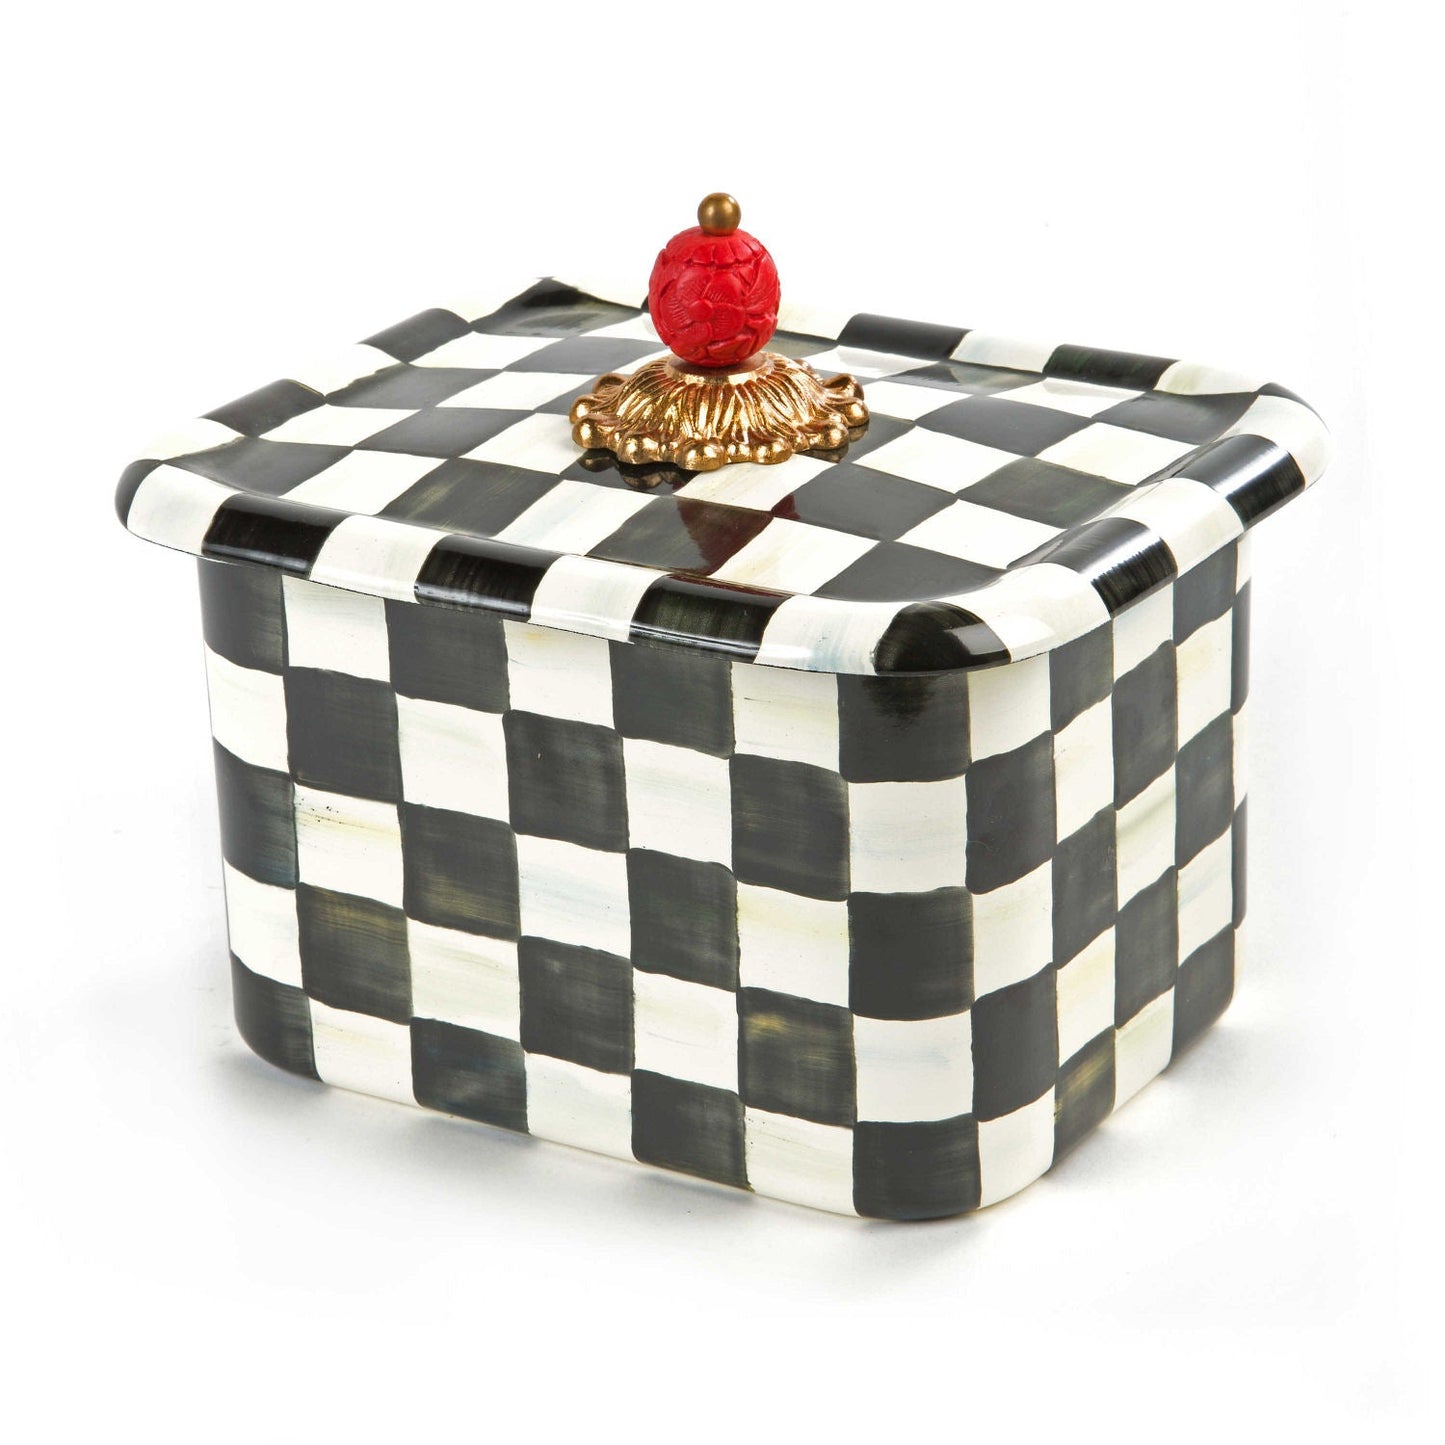 Courtly Check Recipe Box by Mackenzie-Childs - |VESIMI Design|